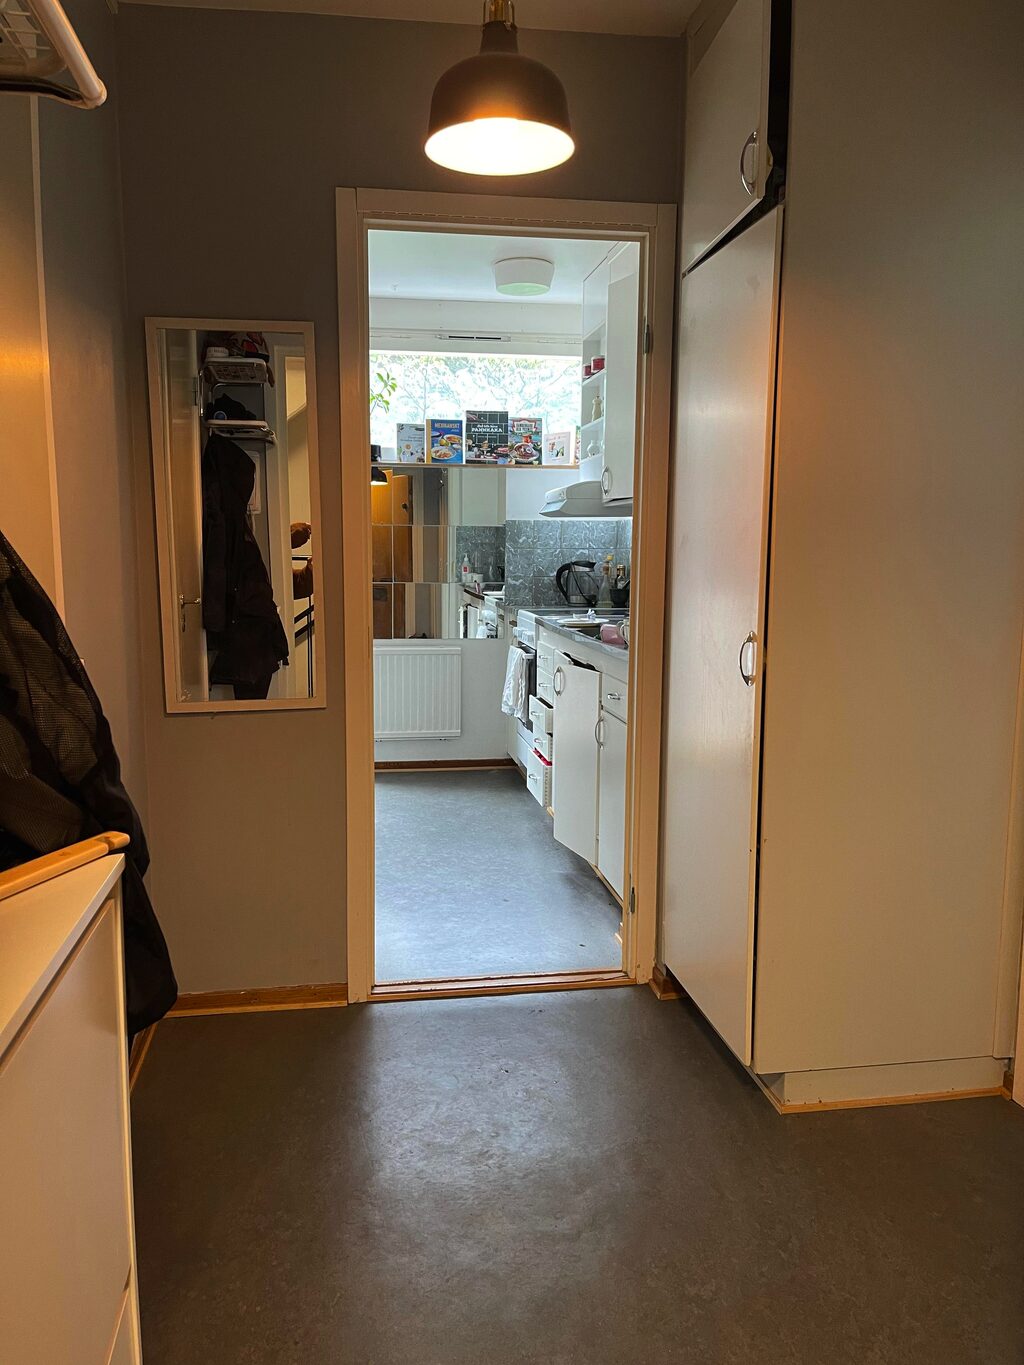 Lägenhetsbyte - Landalabergen 14, 411 29 Göteborg